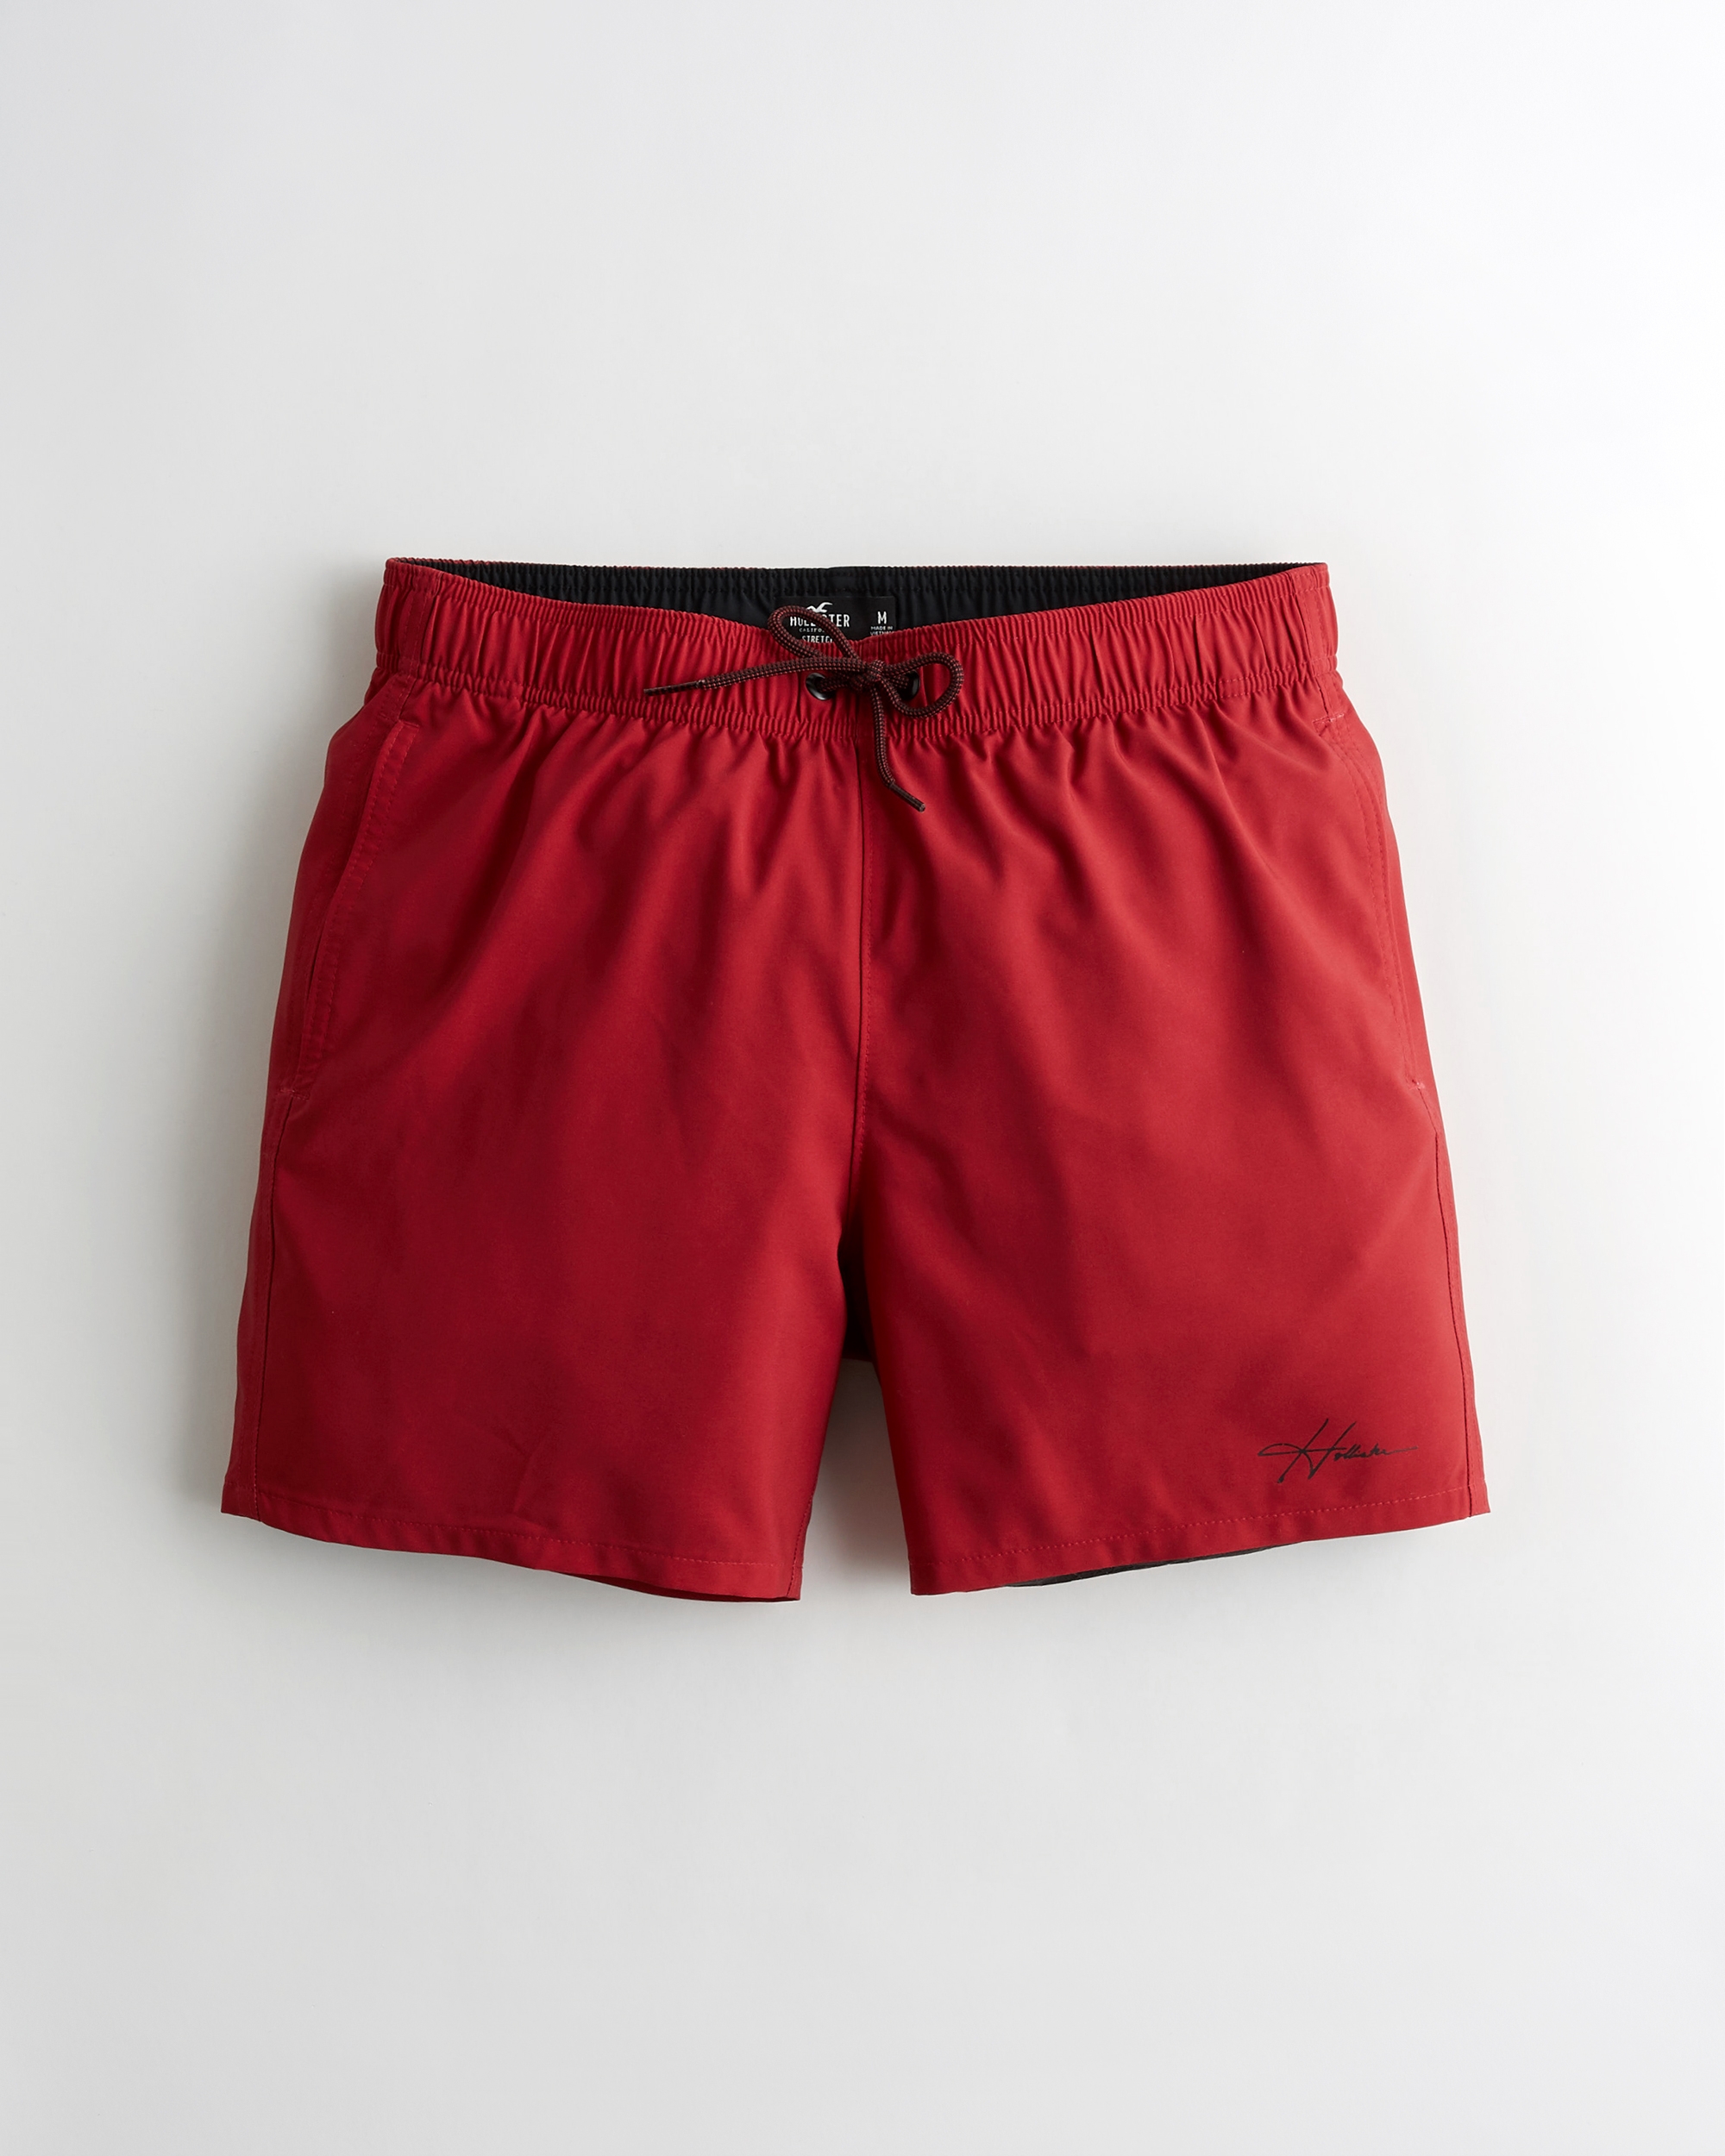 hollister swim shorts sale